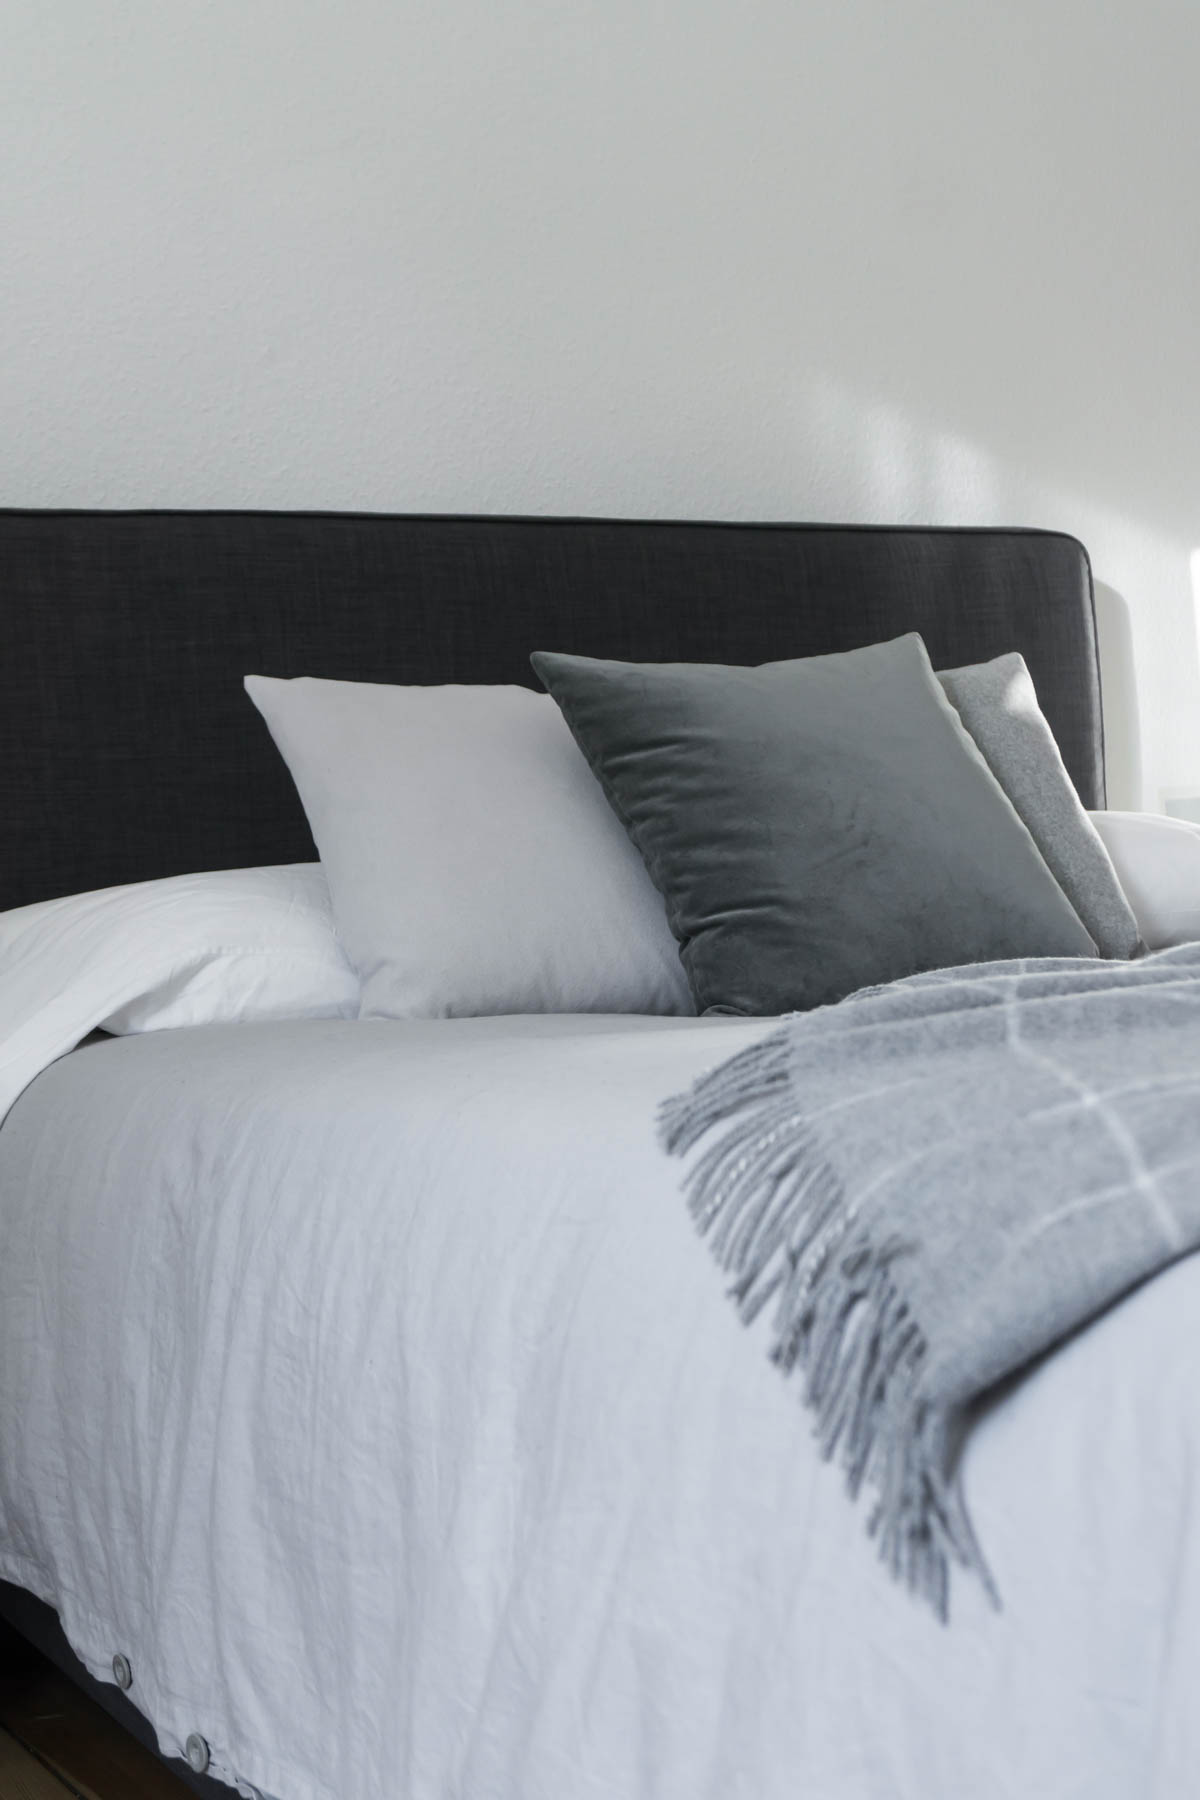 Grey Bedding - Minimalist Bedroom, Scandinavian Design, Calming Interior // RG Daily Blog